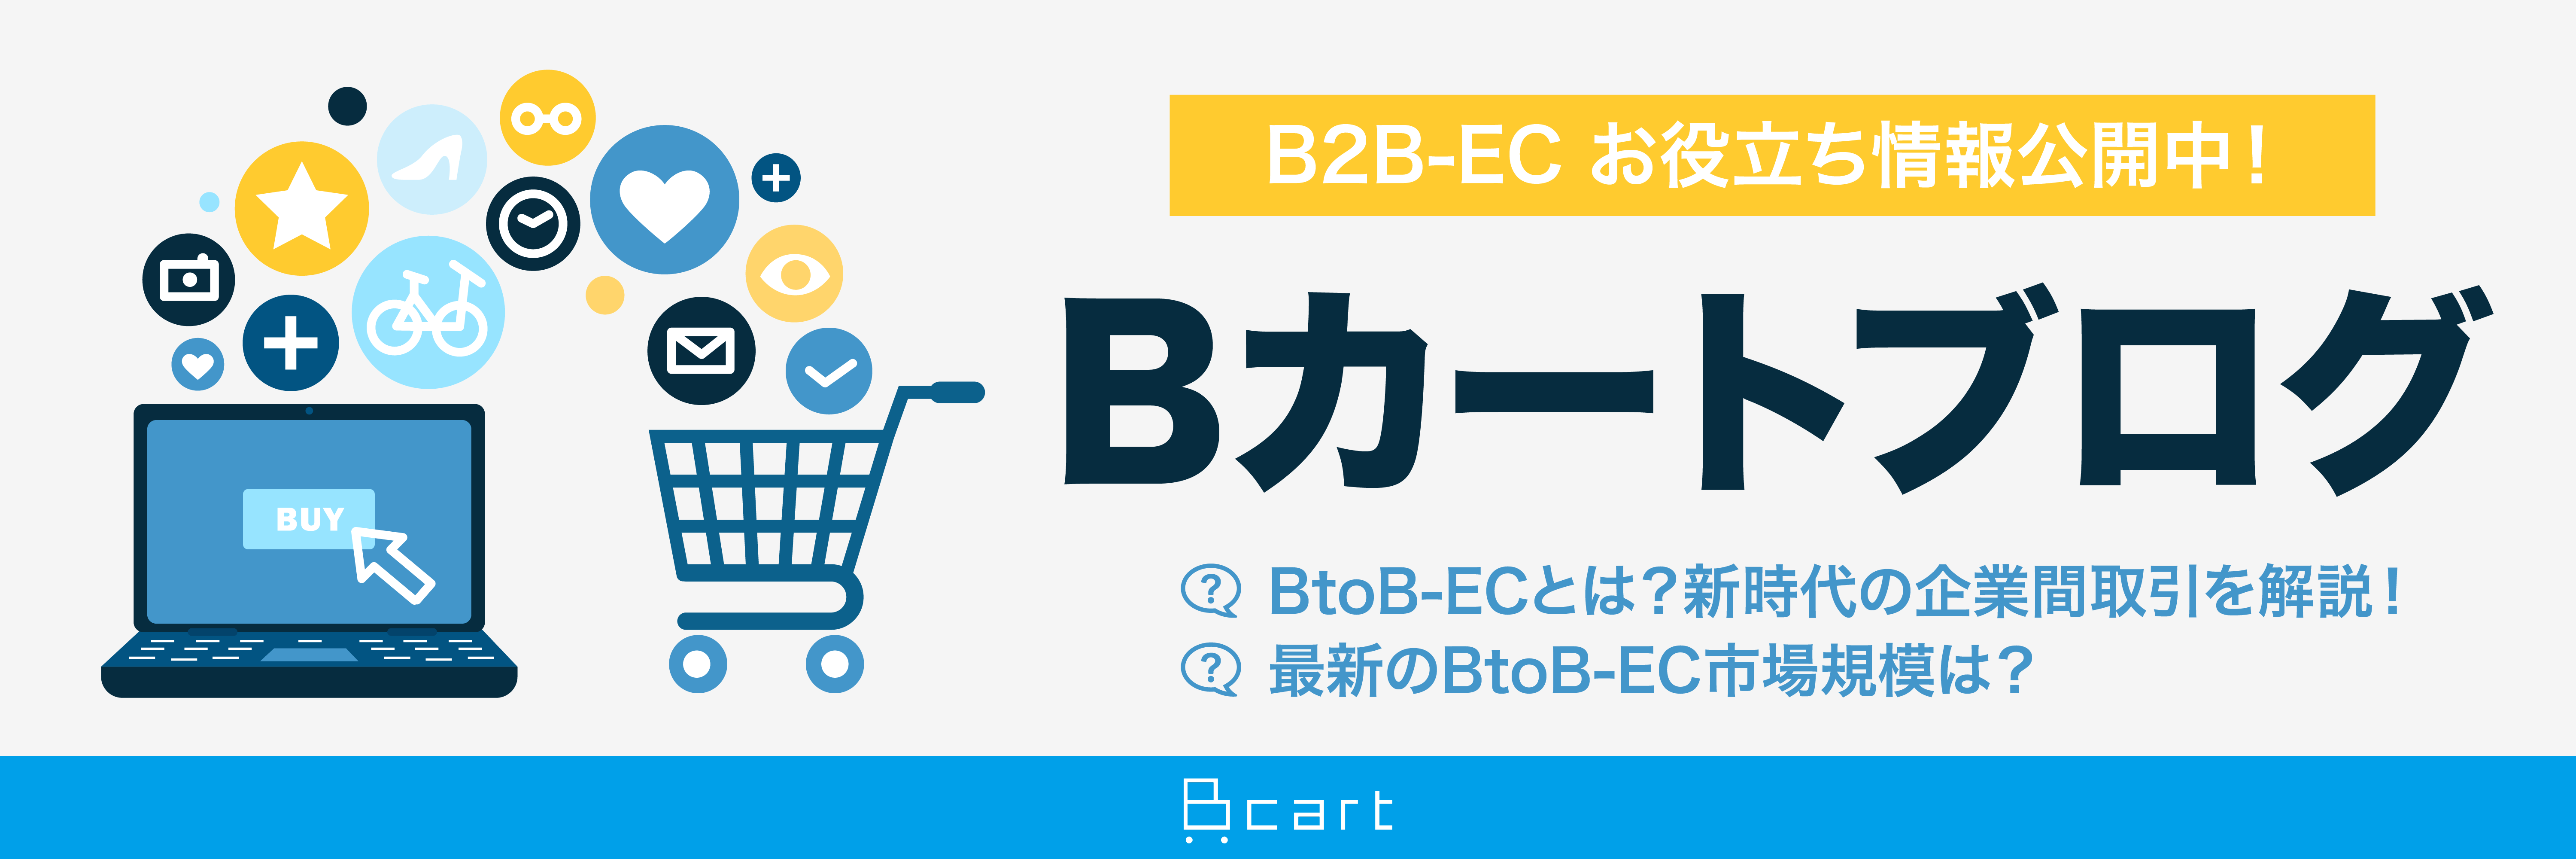 B2B-EC お役立ち情報公開中！Bカートブログ